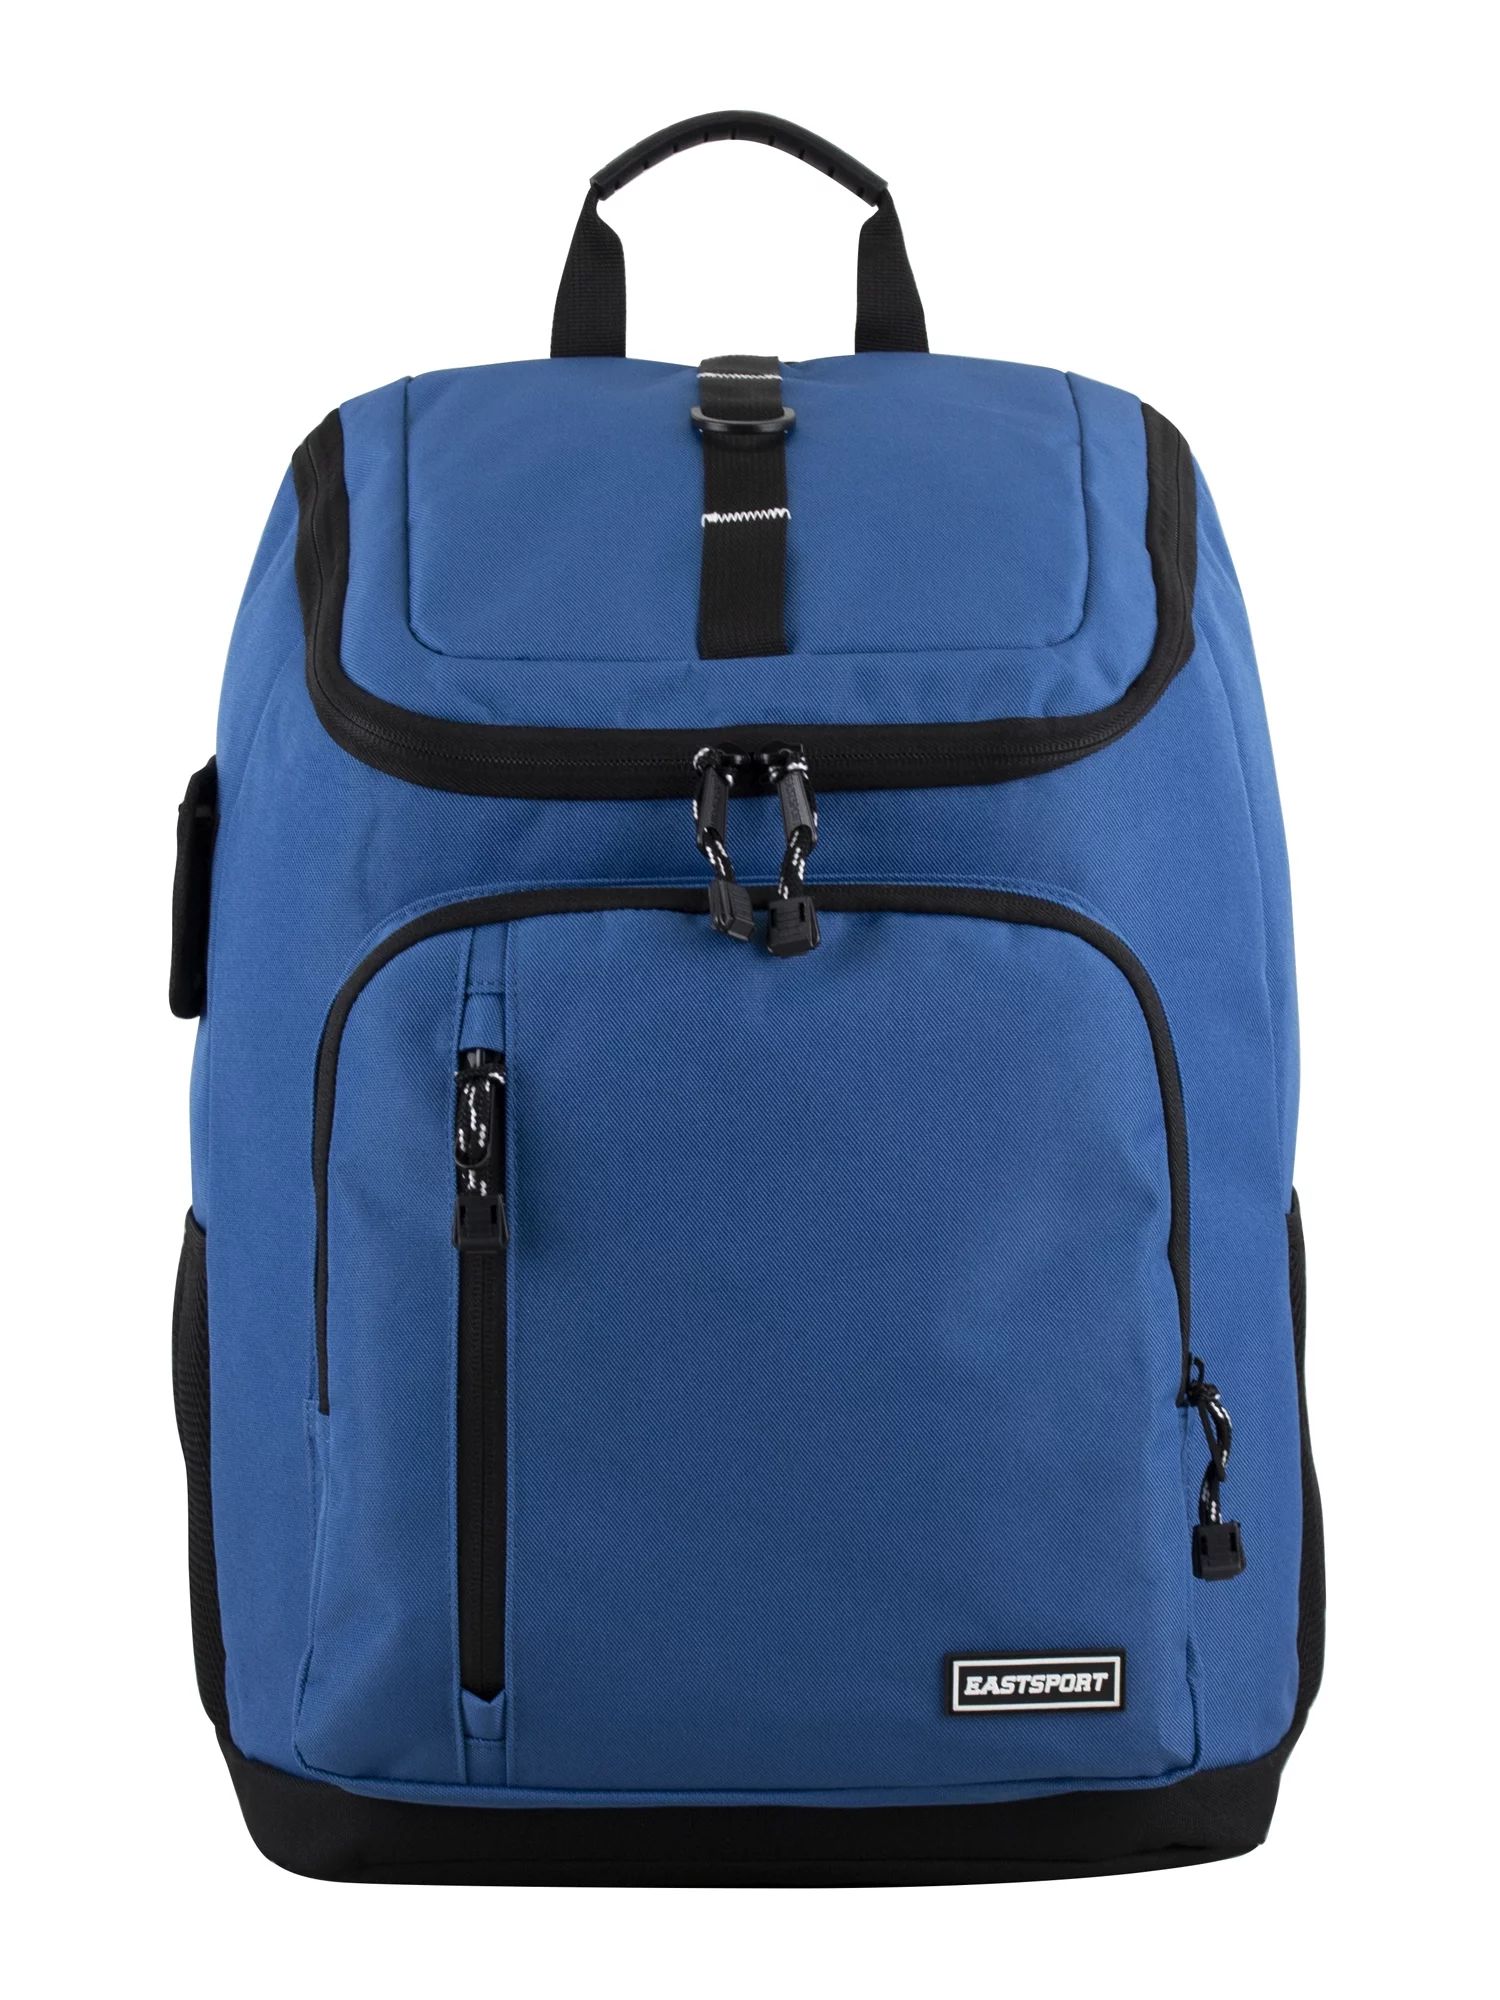 Eastsport Unisex Legend Laptop Backpack, Atlantic Blue | Walmart (US)